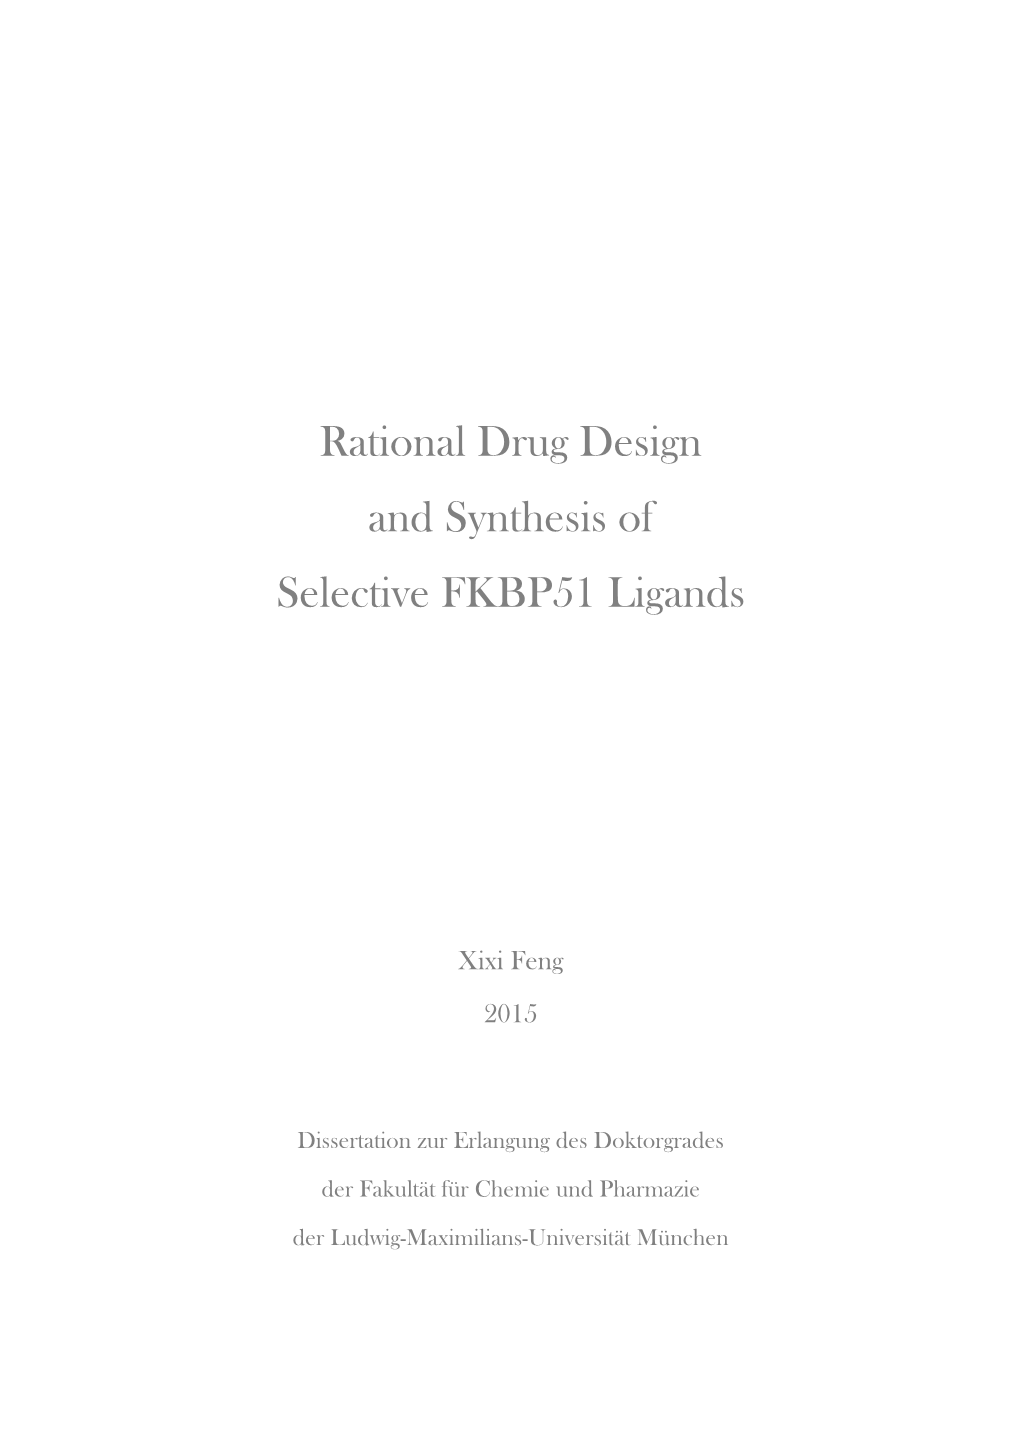 Rational Drug Design and Synthesis of Selective FKBP51 Ligands